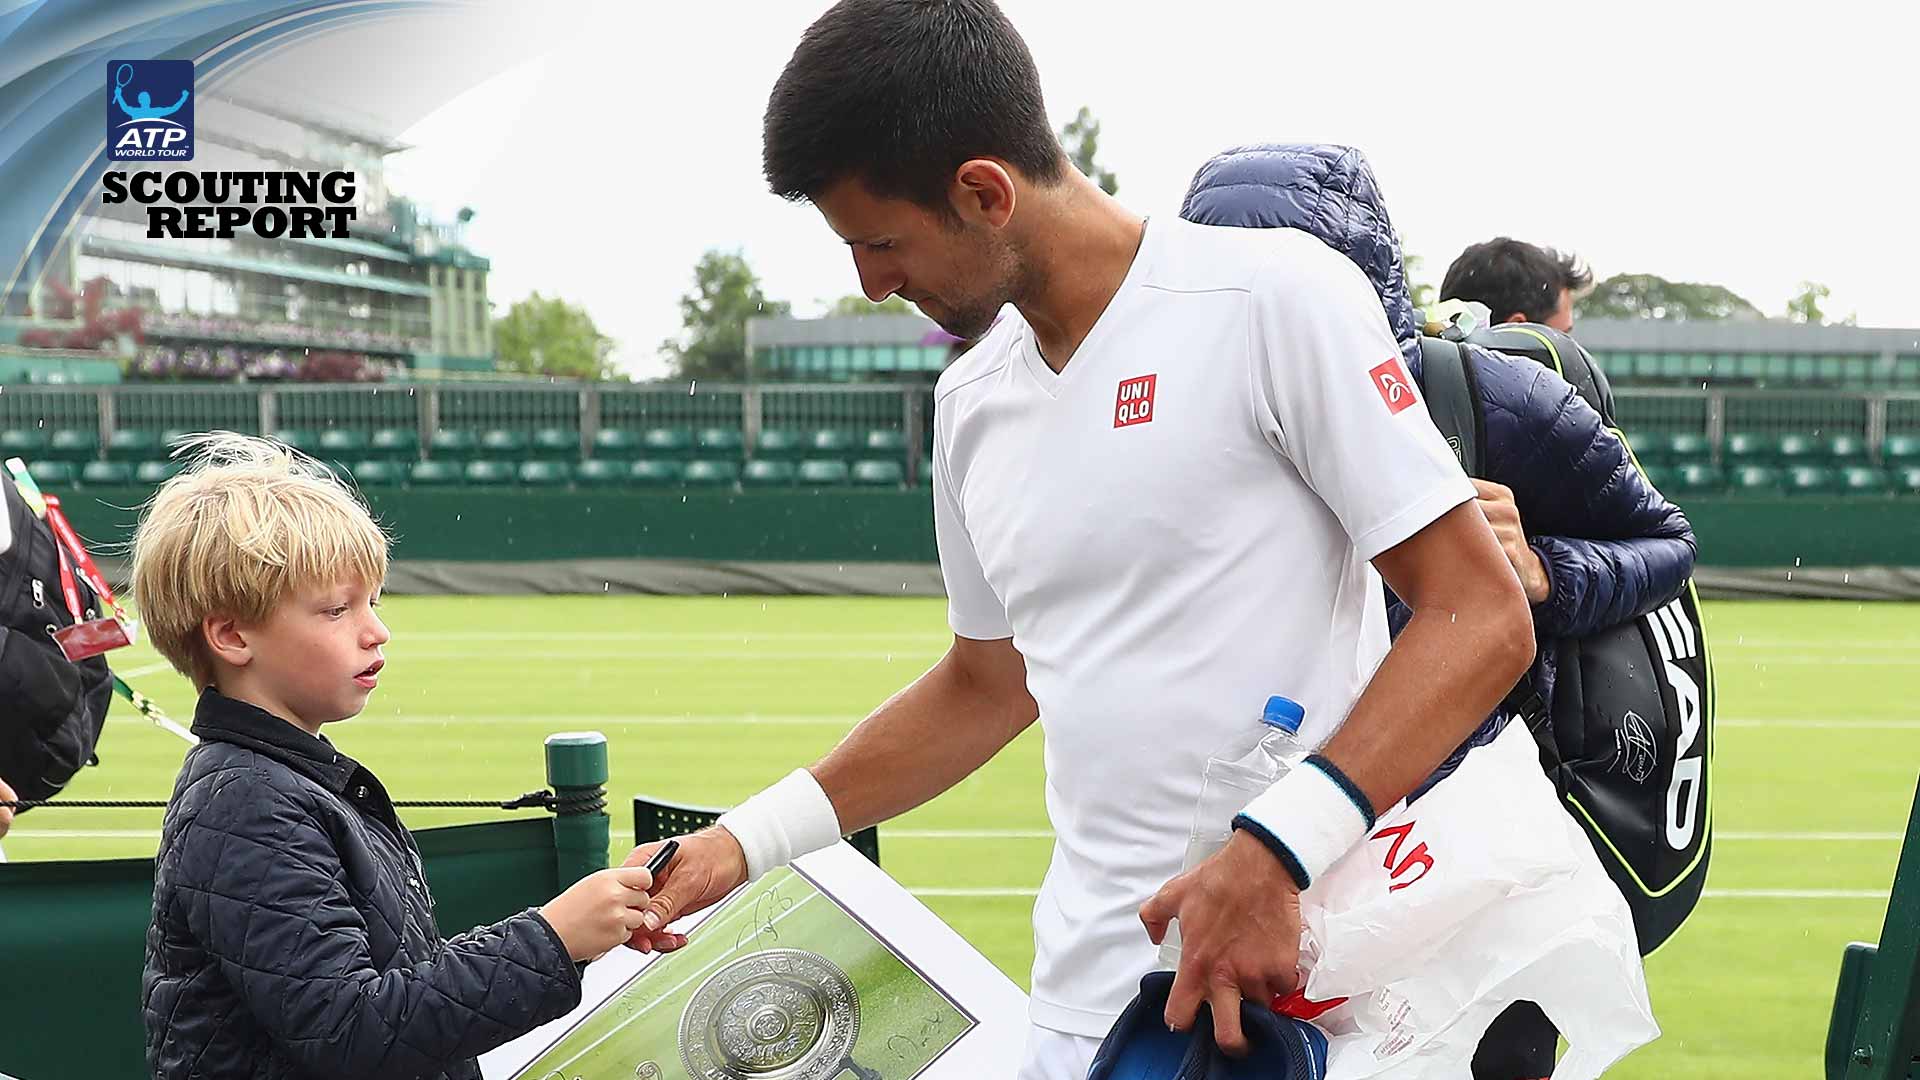 Scouting Report: Djokovic Set To Defend Wimbledon Title. ATP